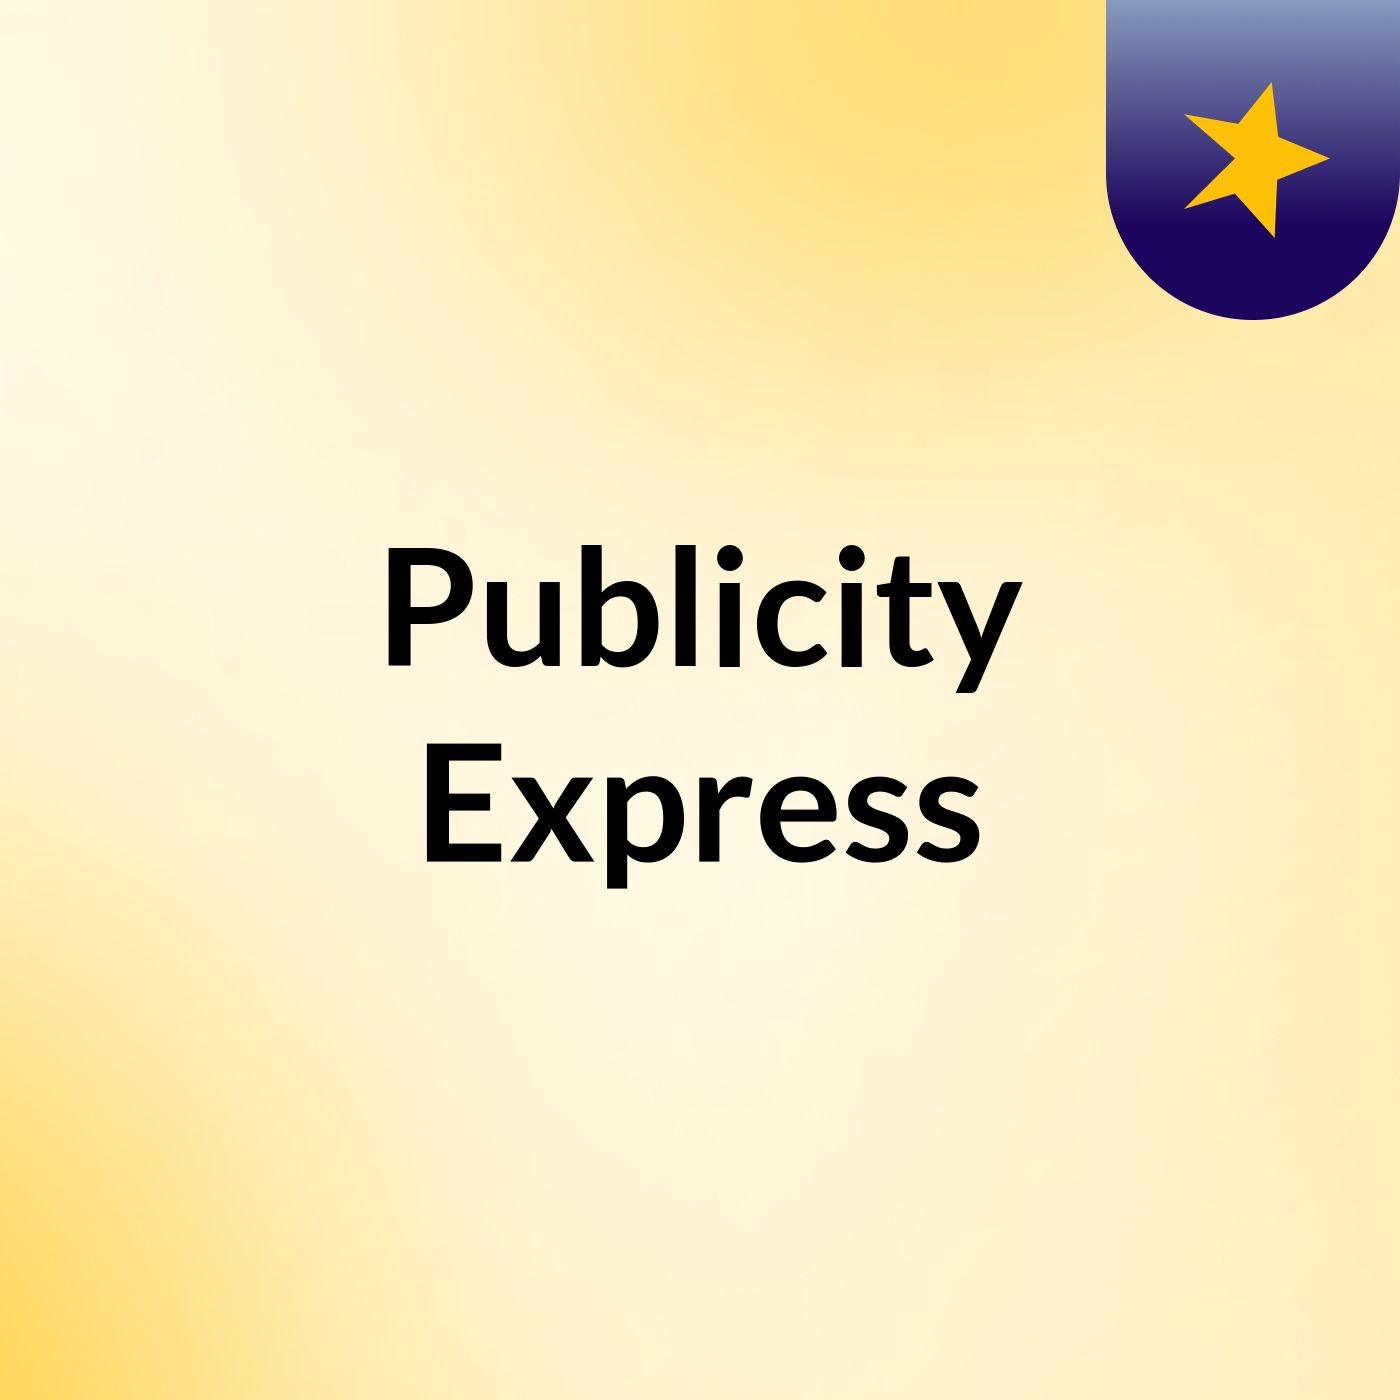 Publicity Express